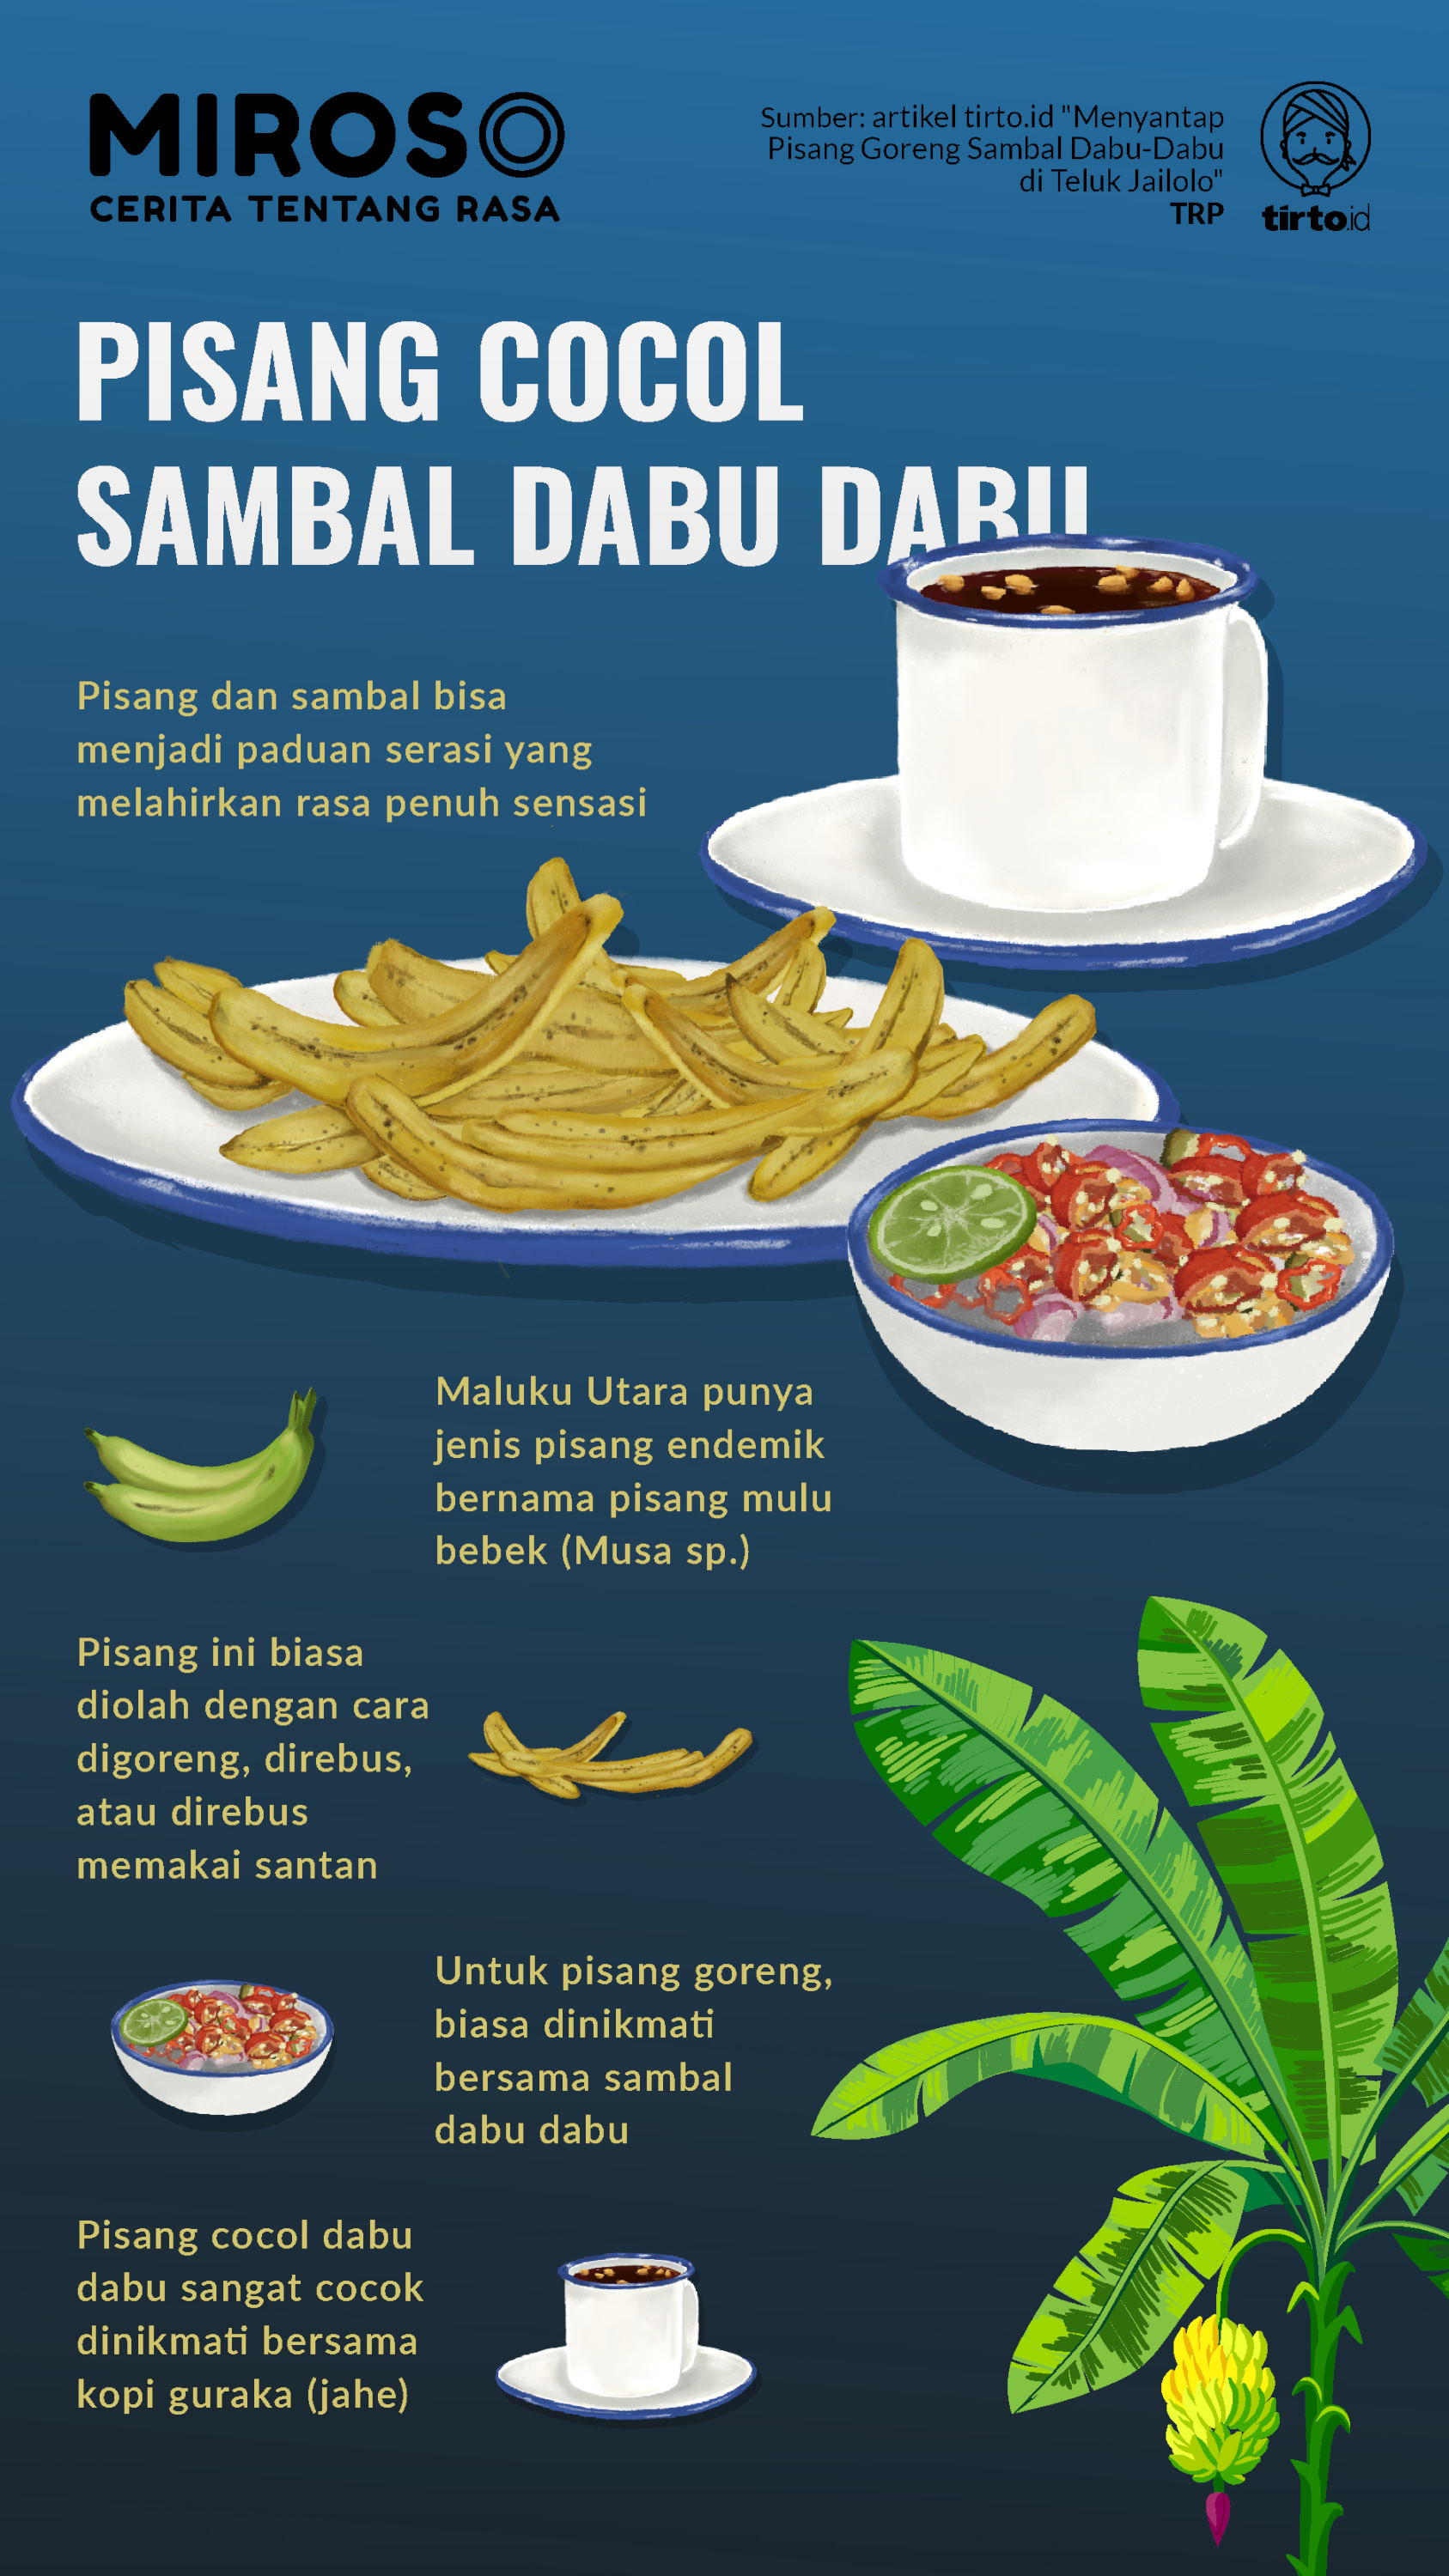 Infografik Miroso Pisang Cocol Sambal Dabu Dabu